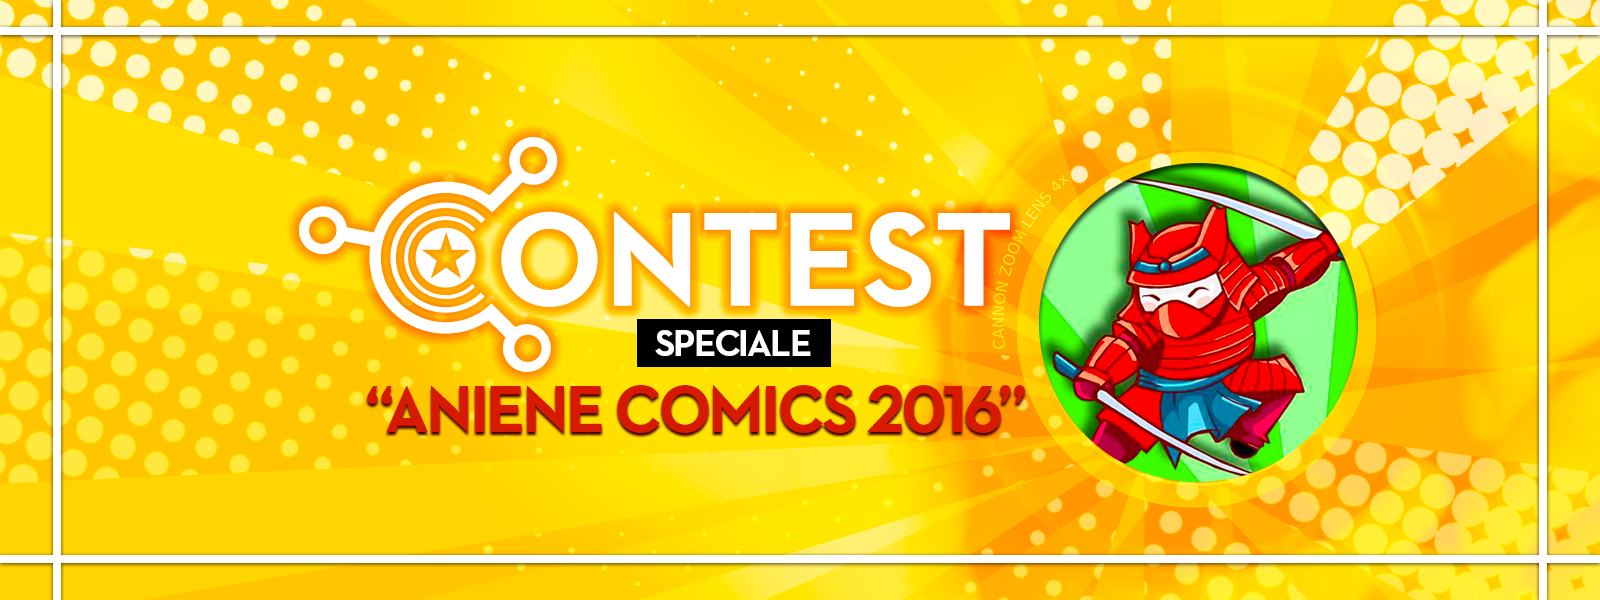 Contest Speciale Aniene Comics 2016: i vincitori